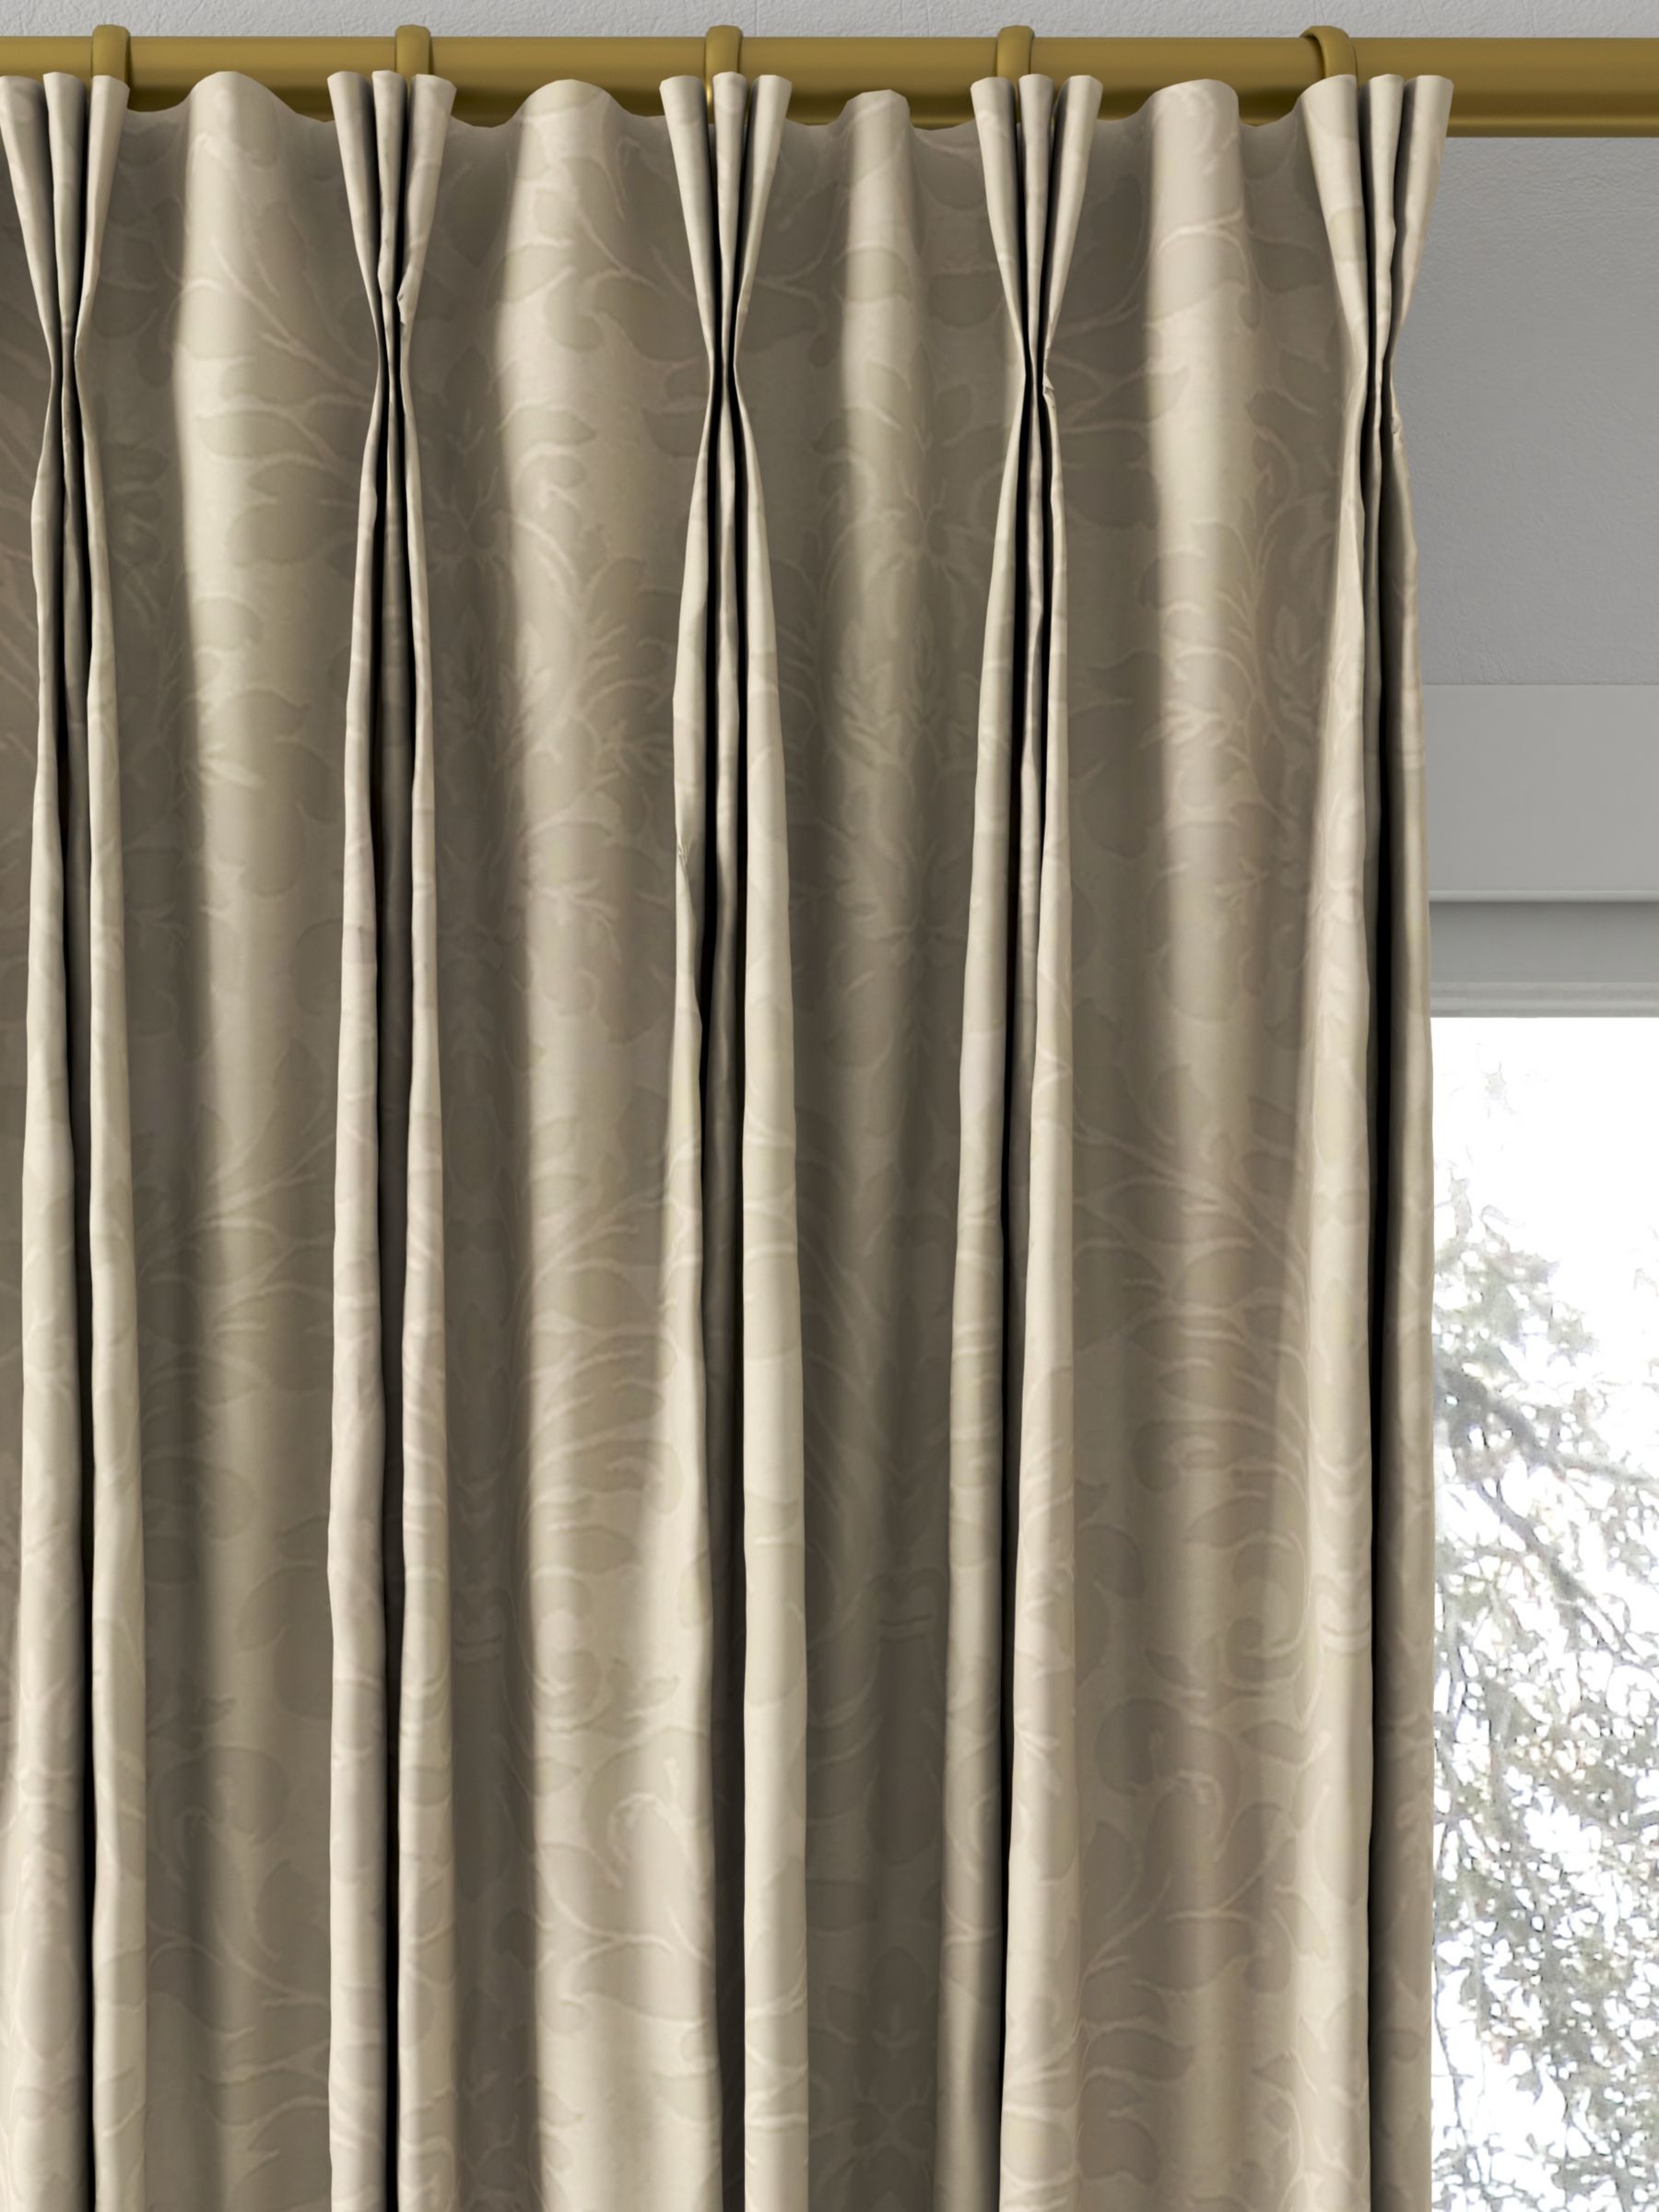 Sanderson Lymington Damask Made to Measure Curtains, Pale Linen